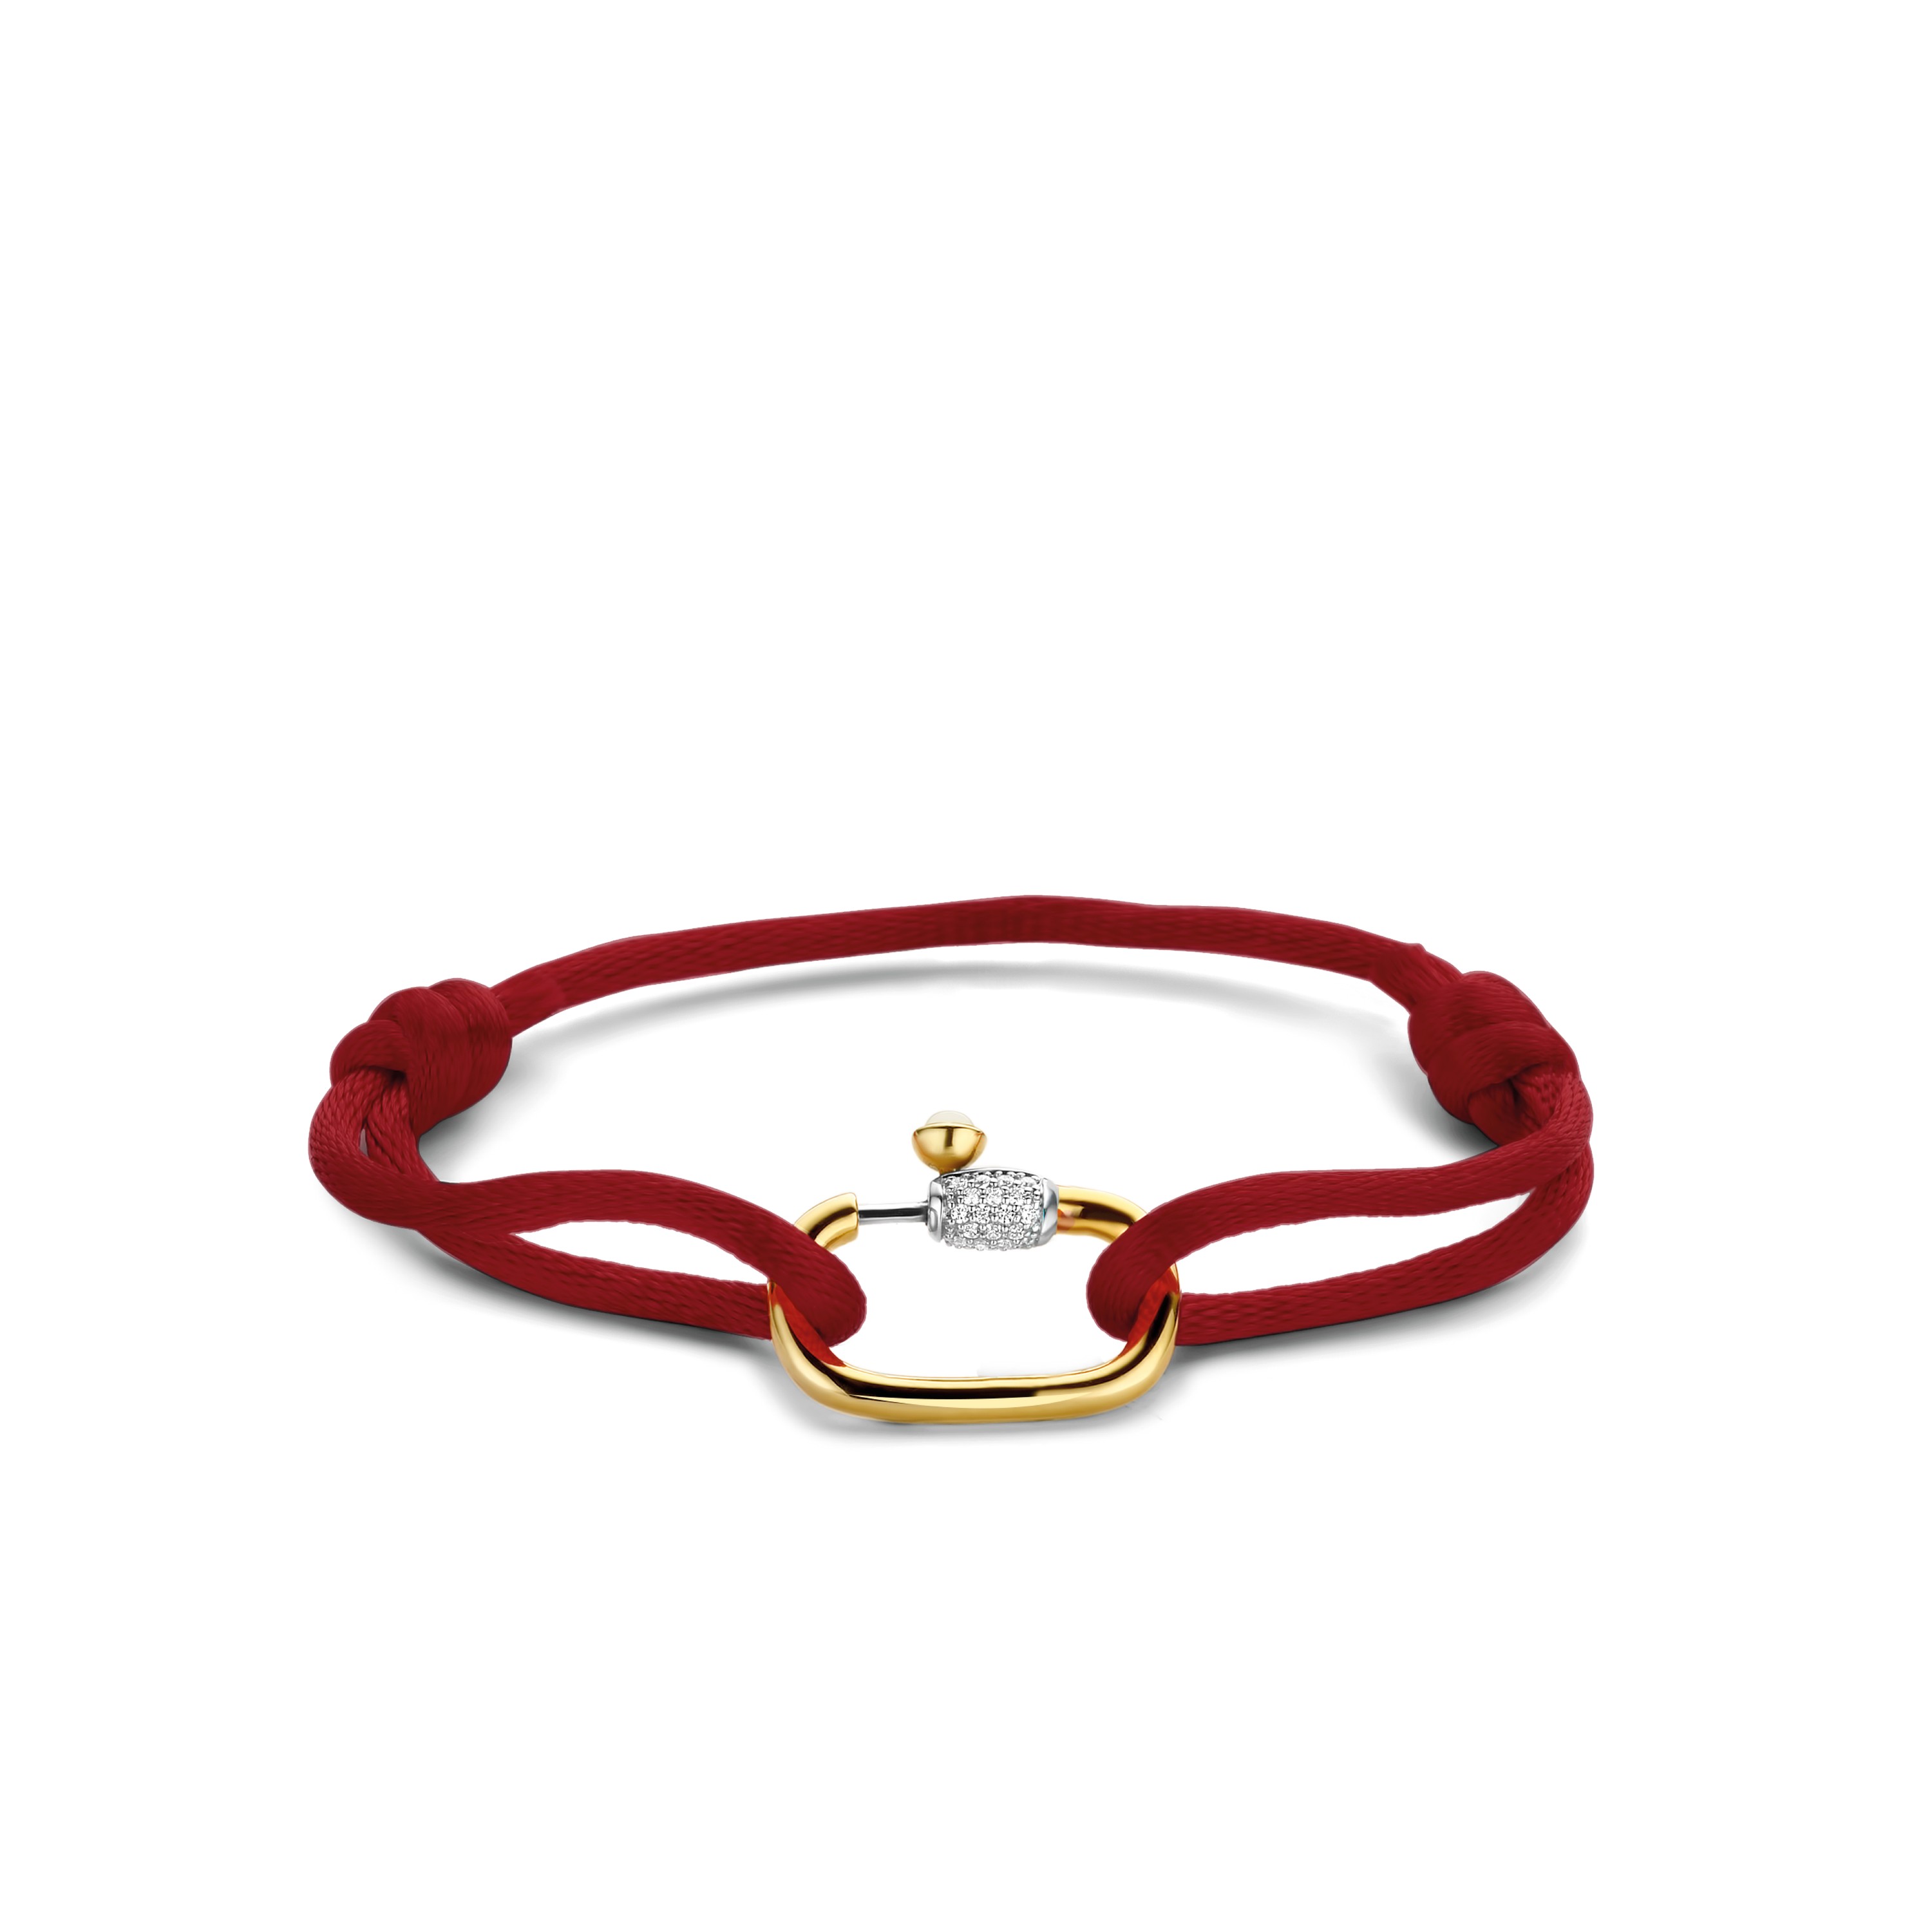 TI SENTO - Milano Bracelet 2964RD Gala Jewelers Inc. White Oak, PA